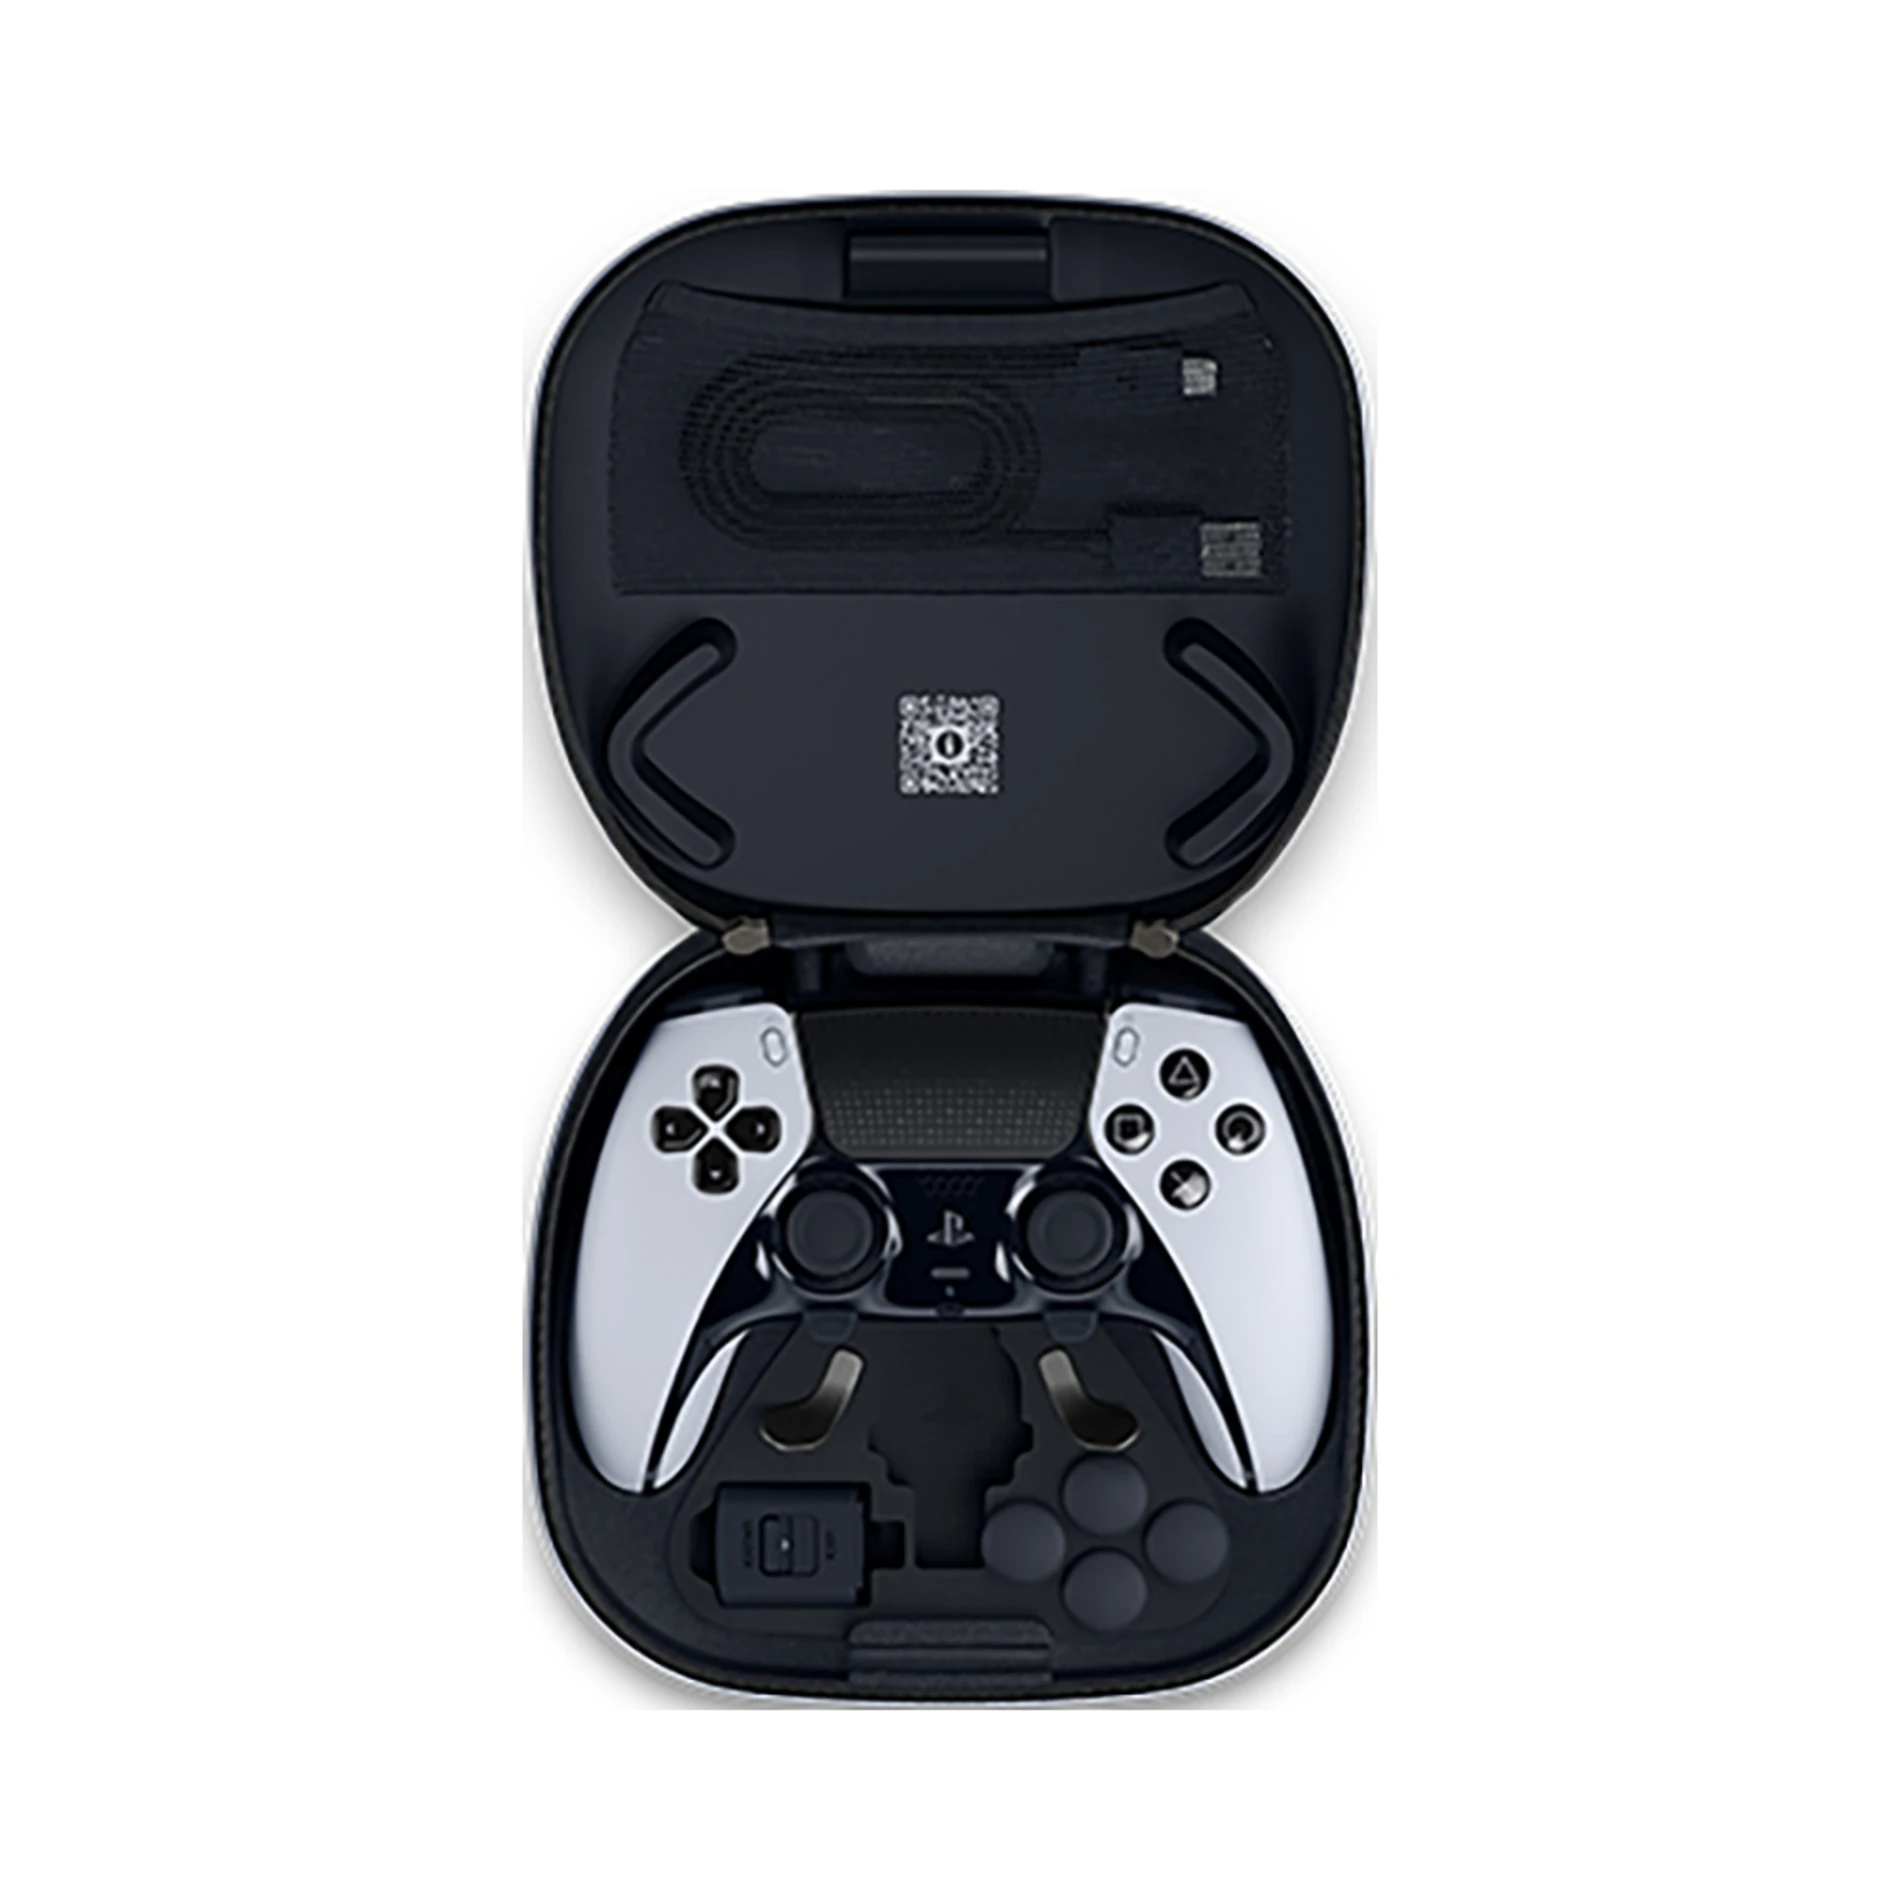 Sony PlayStation5 DualSense Edge Wireless Controller Oyun Kolu